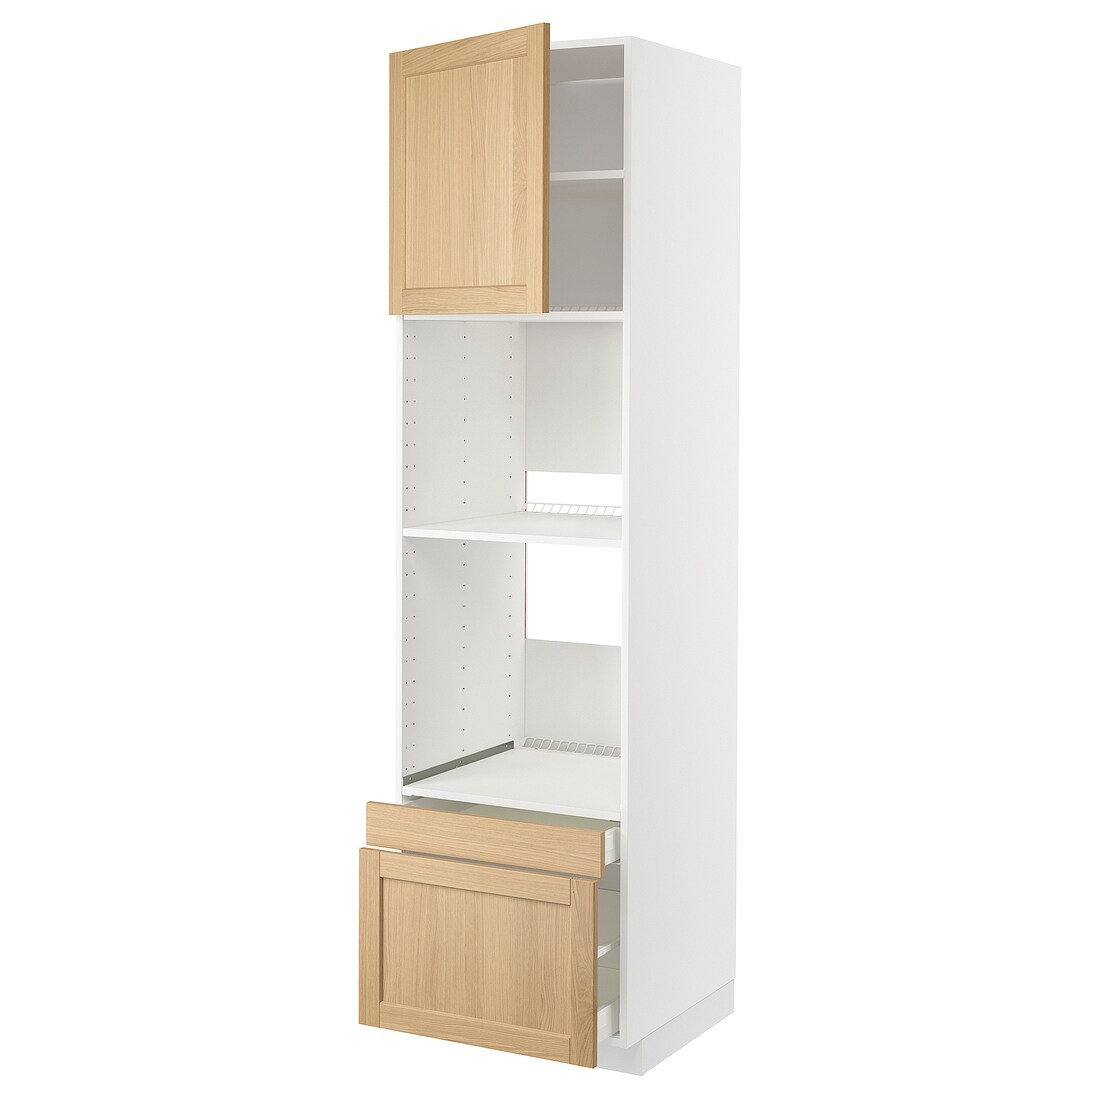 IKEA METOD / MAXIMERA Висока шафа для духовки комбі з дверима / шухлядами, білий / дуб Forsbacka, 60x60x220 см 89509523 895.095.23